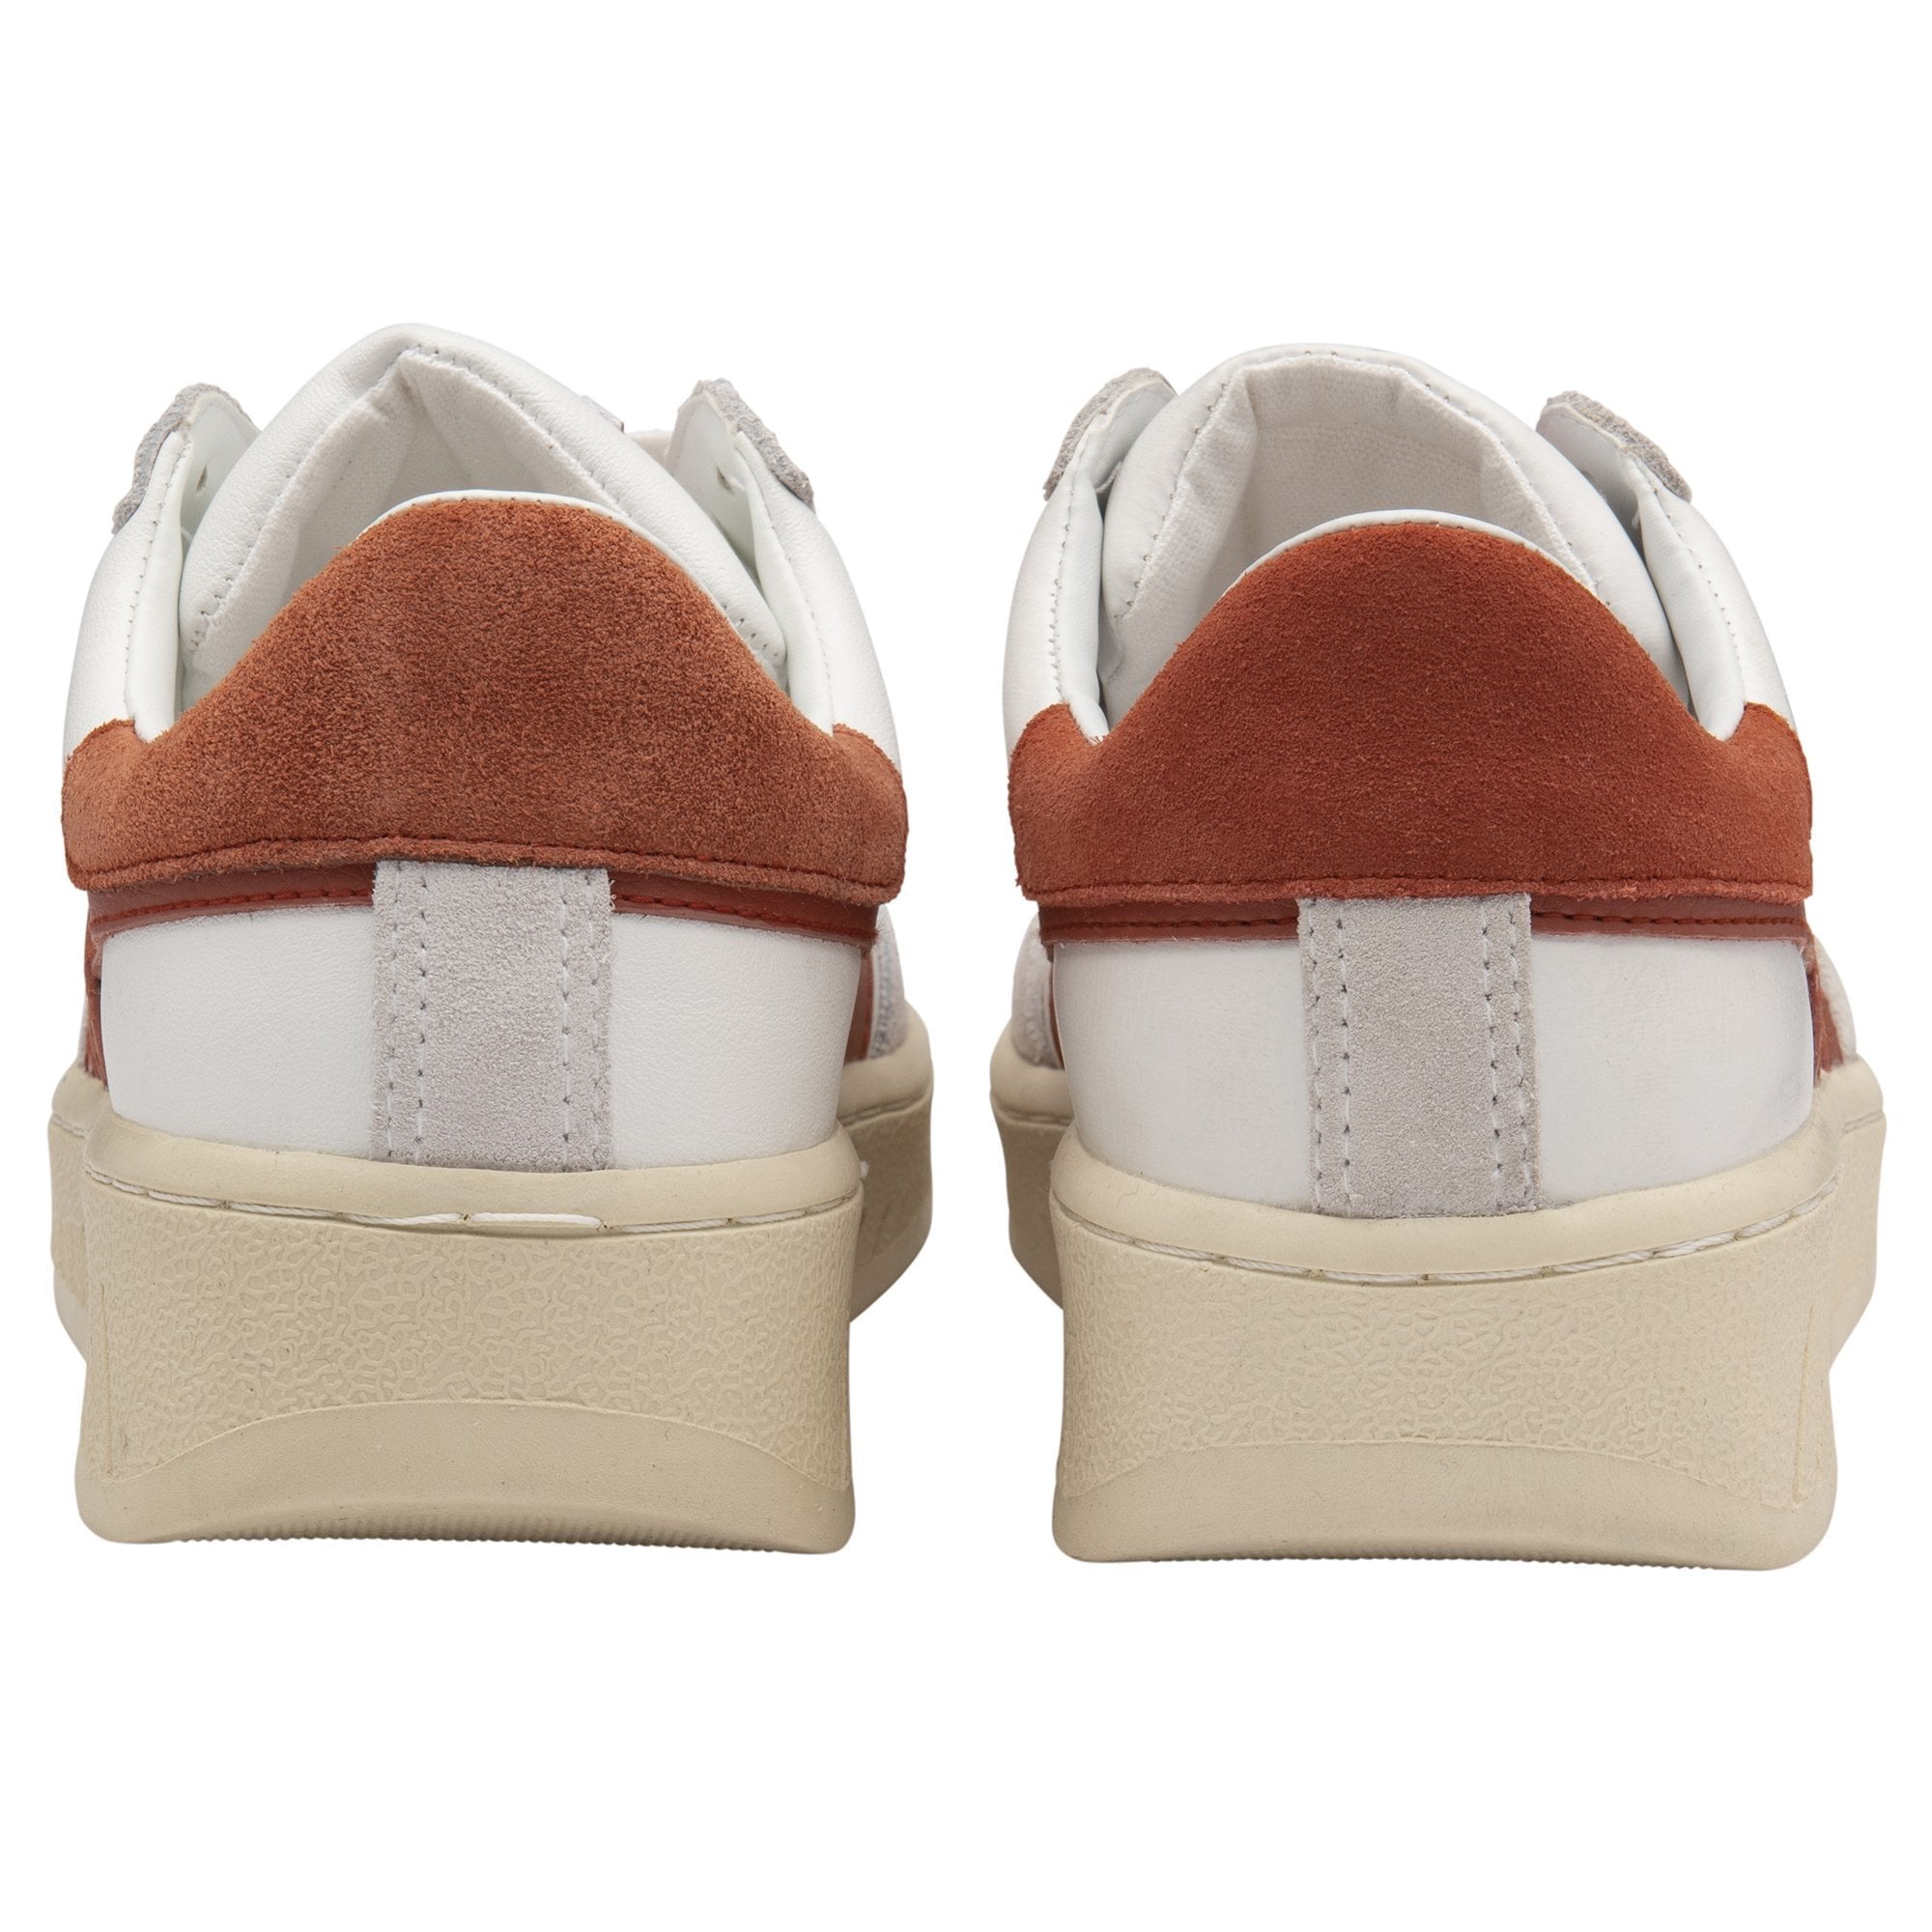 Gola Dropshot White/Orange Spice Sneaker